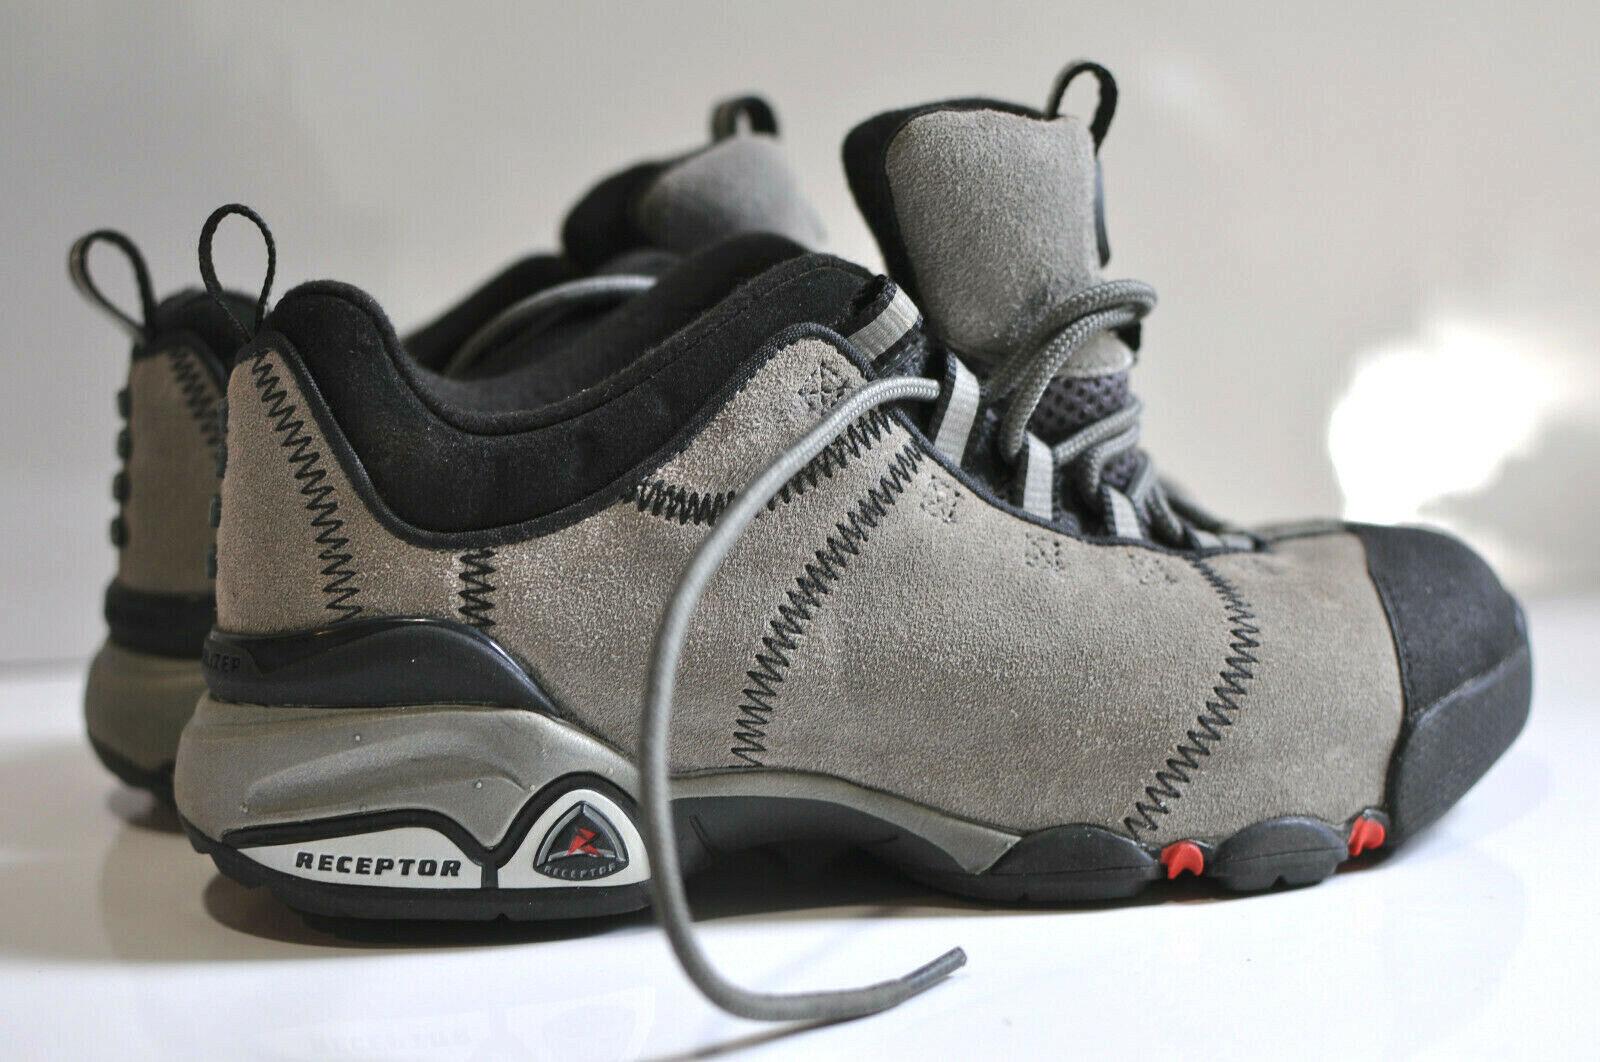 Ecco Womens Receptor grey leather trail hiking shoes size EU 37 6-6.5 Postorder zeer gewaardeerd